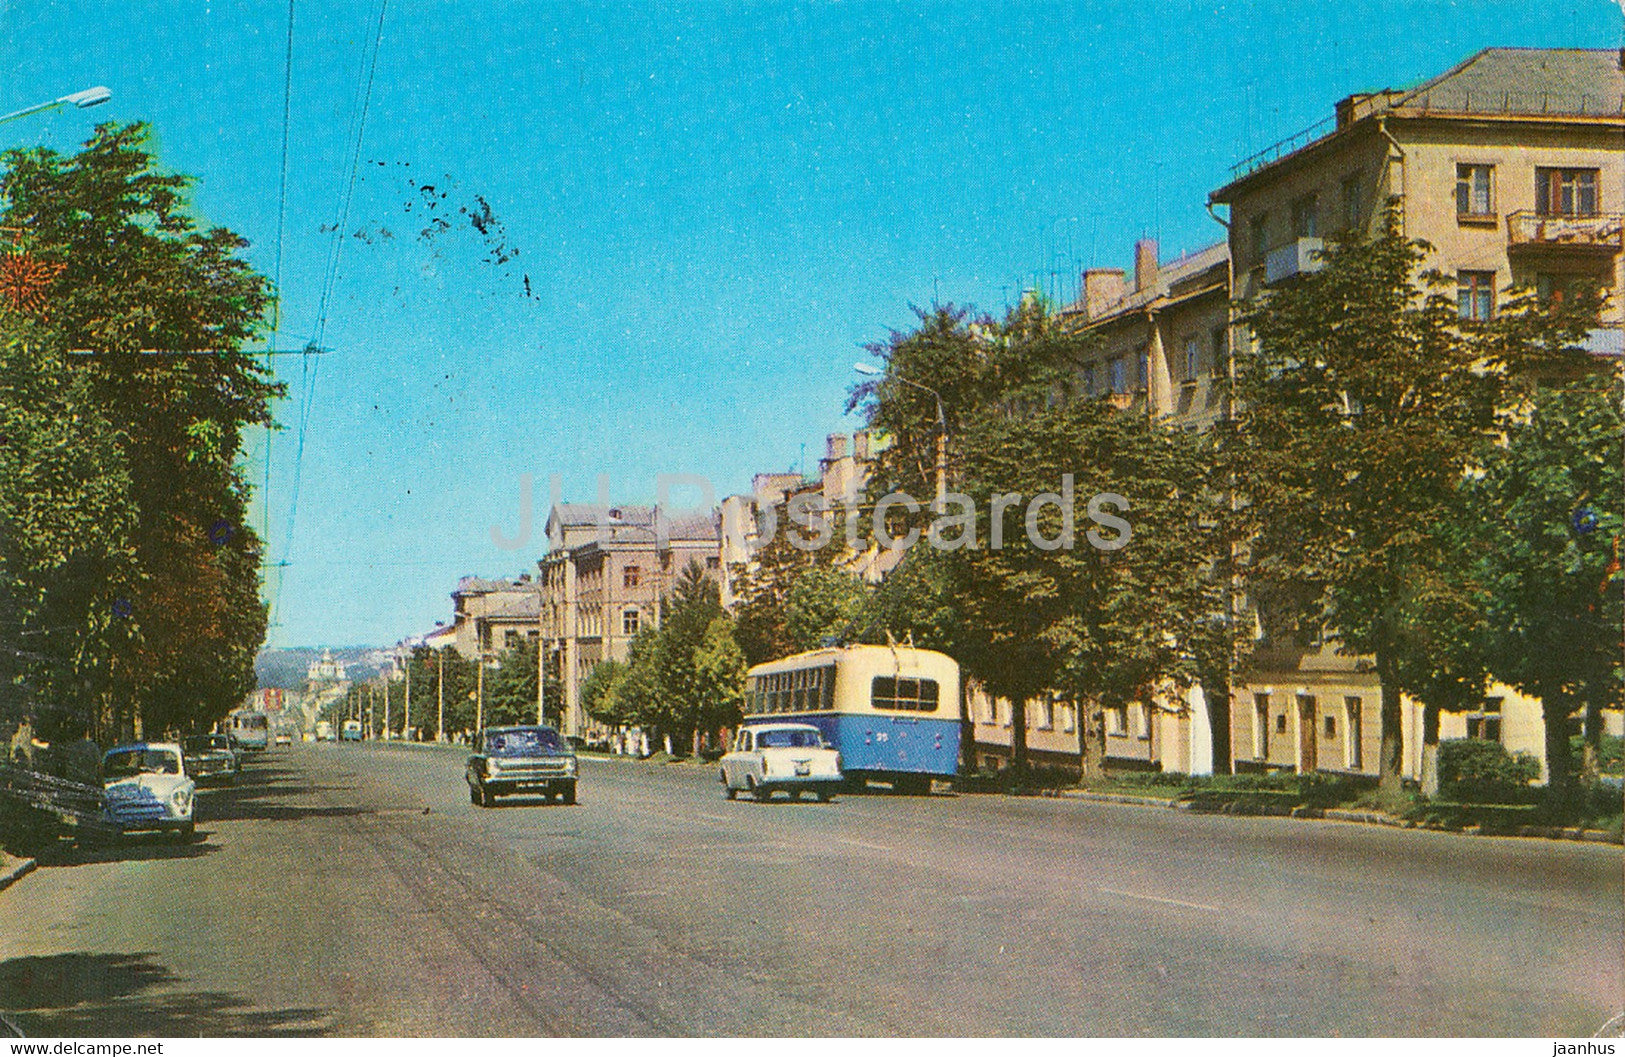 Tula - Lenin prospekt - avenue - car Volga - Zaporozhets - bus - 1972 - Russia USSR - used - JH Postcards